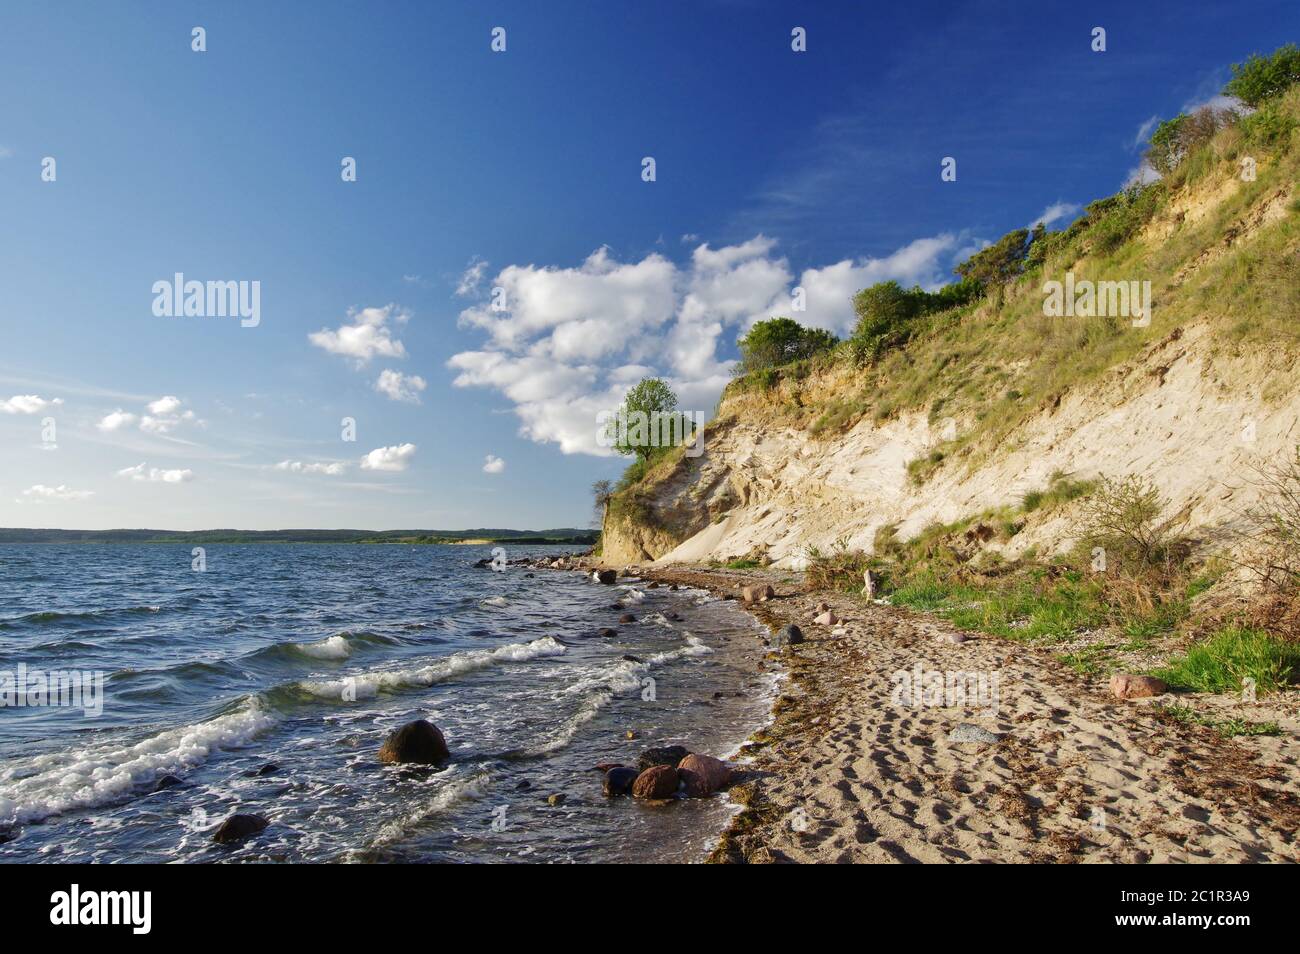 Sulla spiaggia naturale, scogliera, Reddevitzer HÃ¶ft, MÃ¶nchgut, Isola di RÃ¼gen, Meclemburgo-Vorpommern, Germania, Europa occidentale Foto Stock